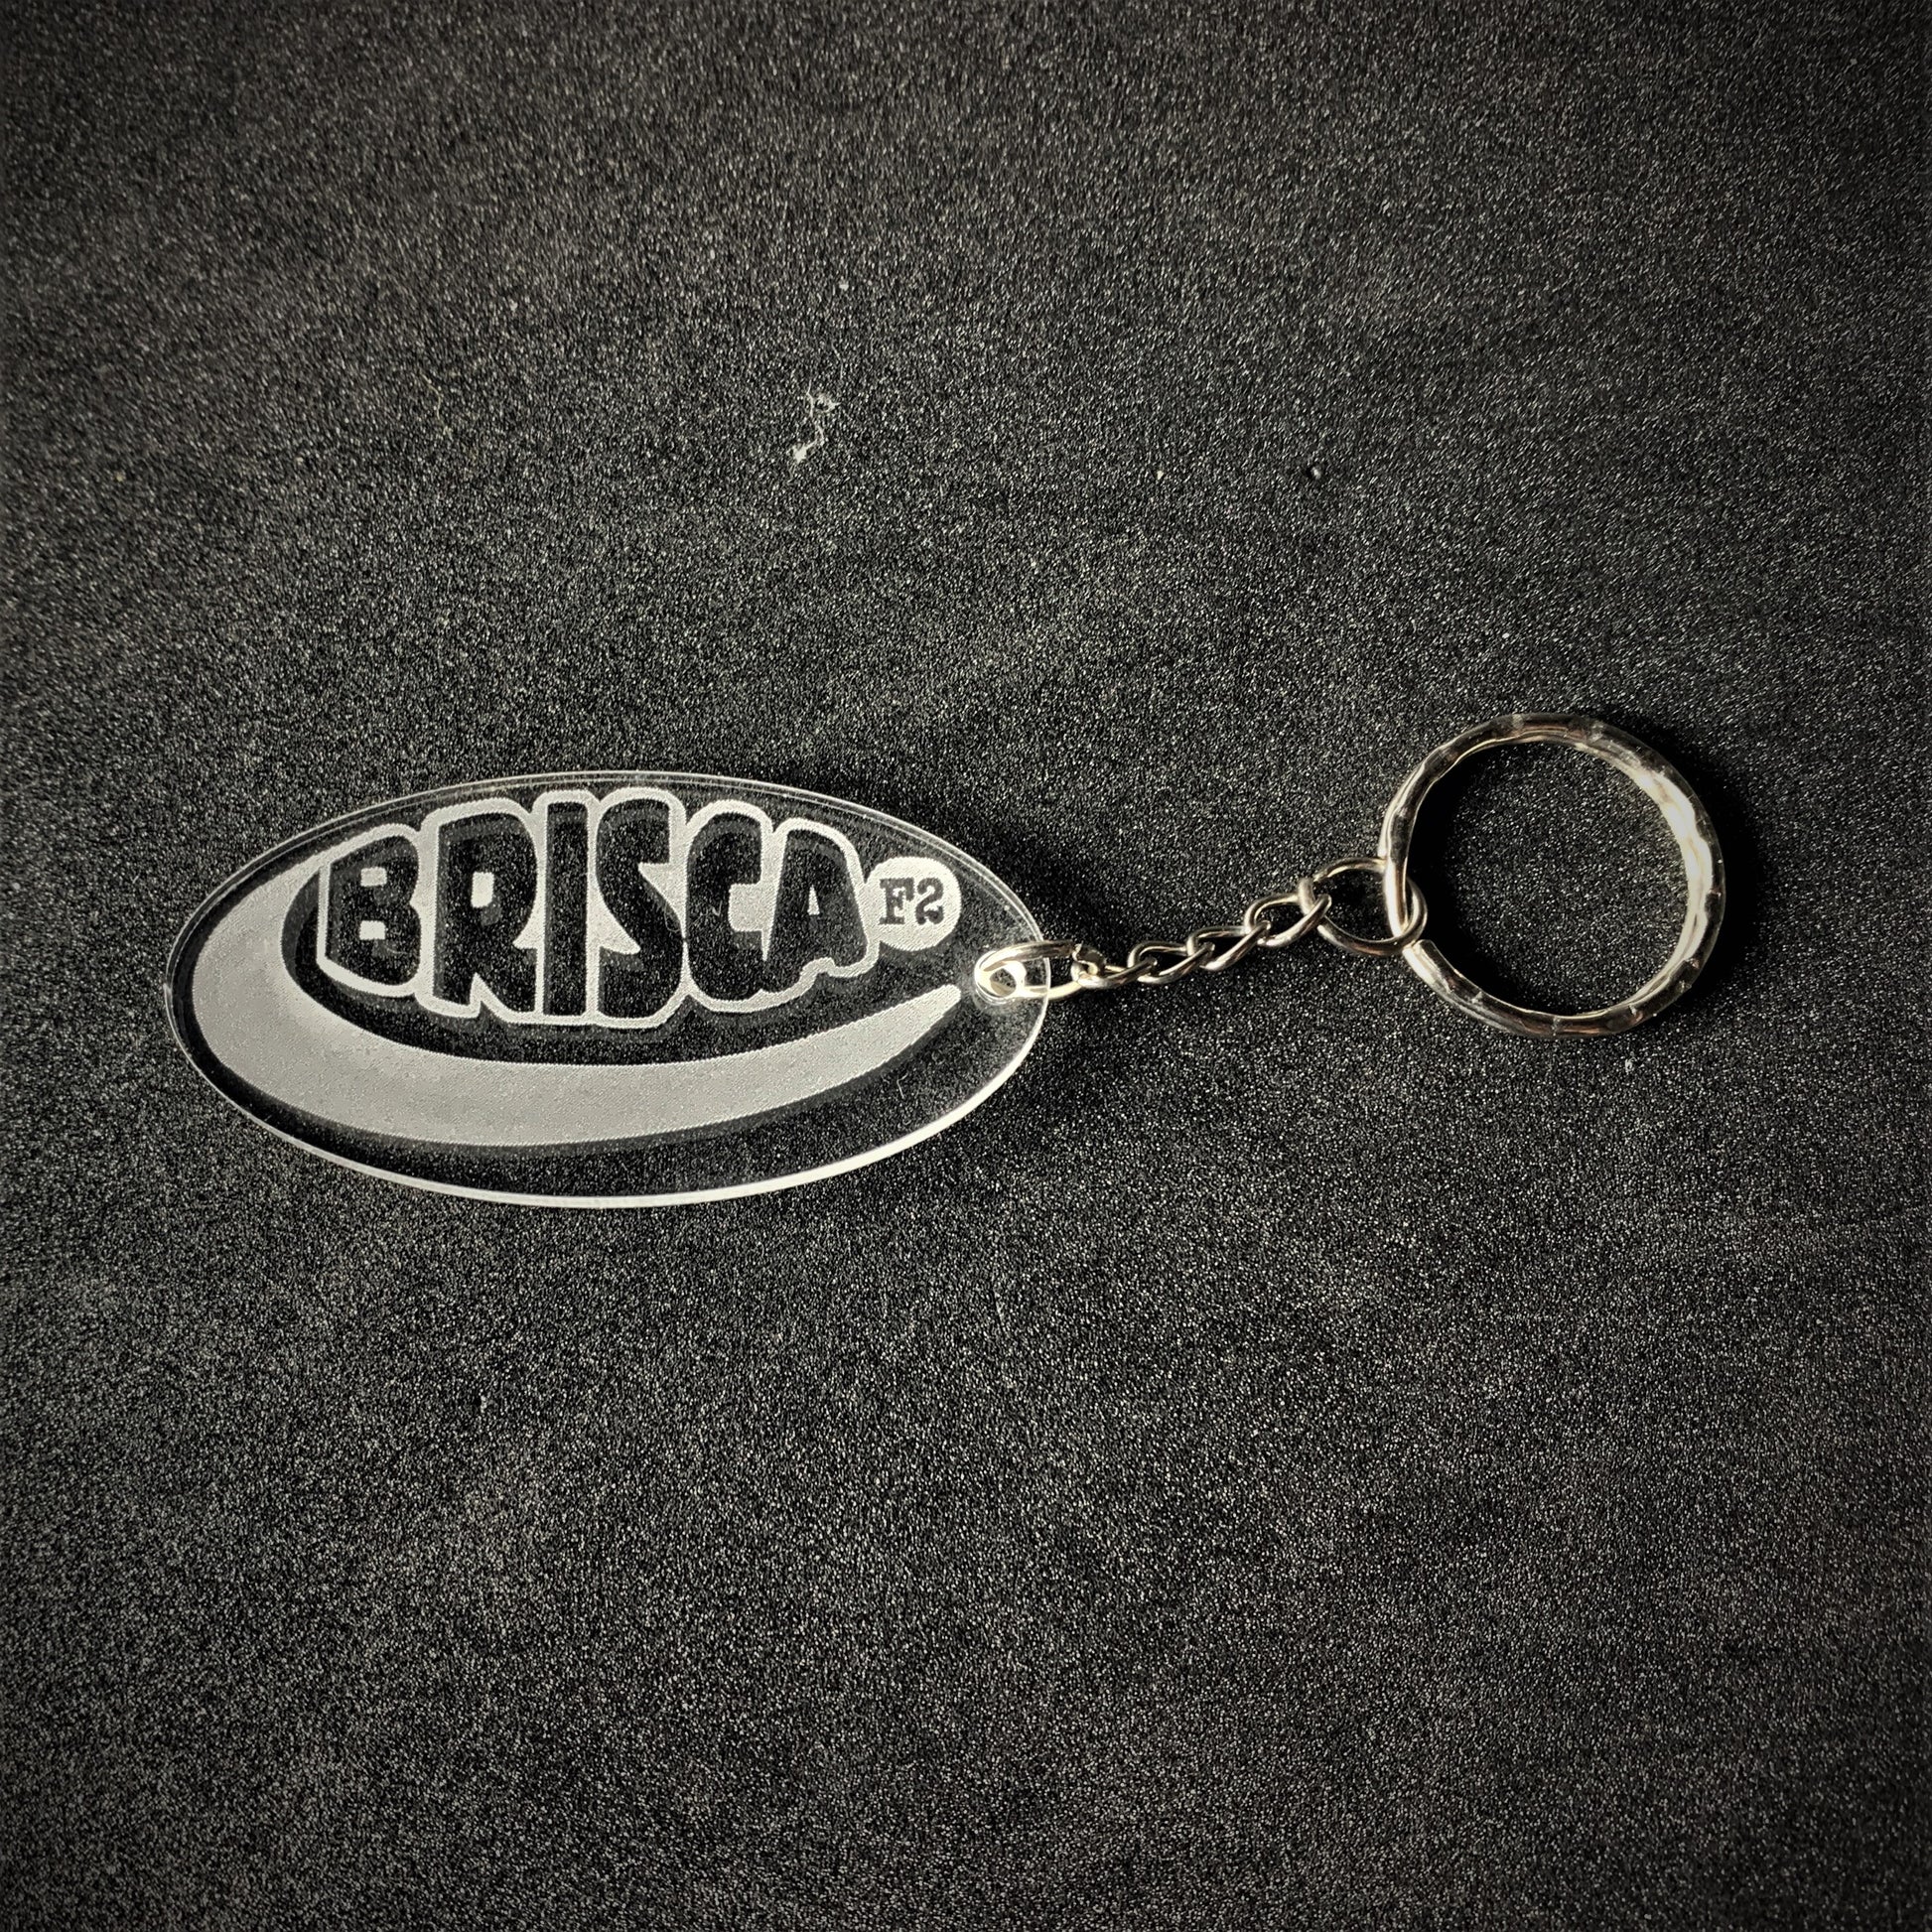 Brisca F2 Keyring - Logo - Key Ring - Stock Car & Banger Toy Tracks